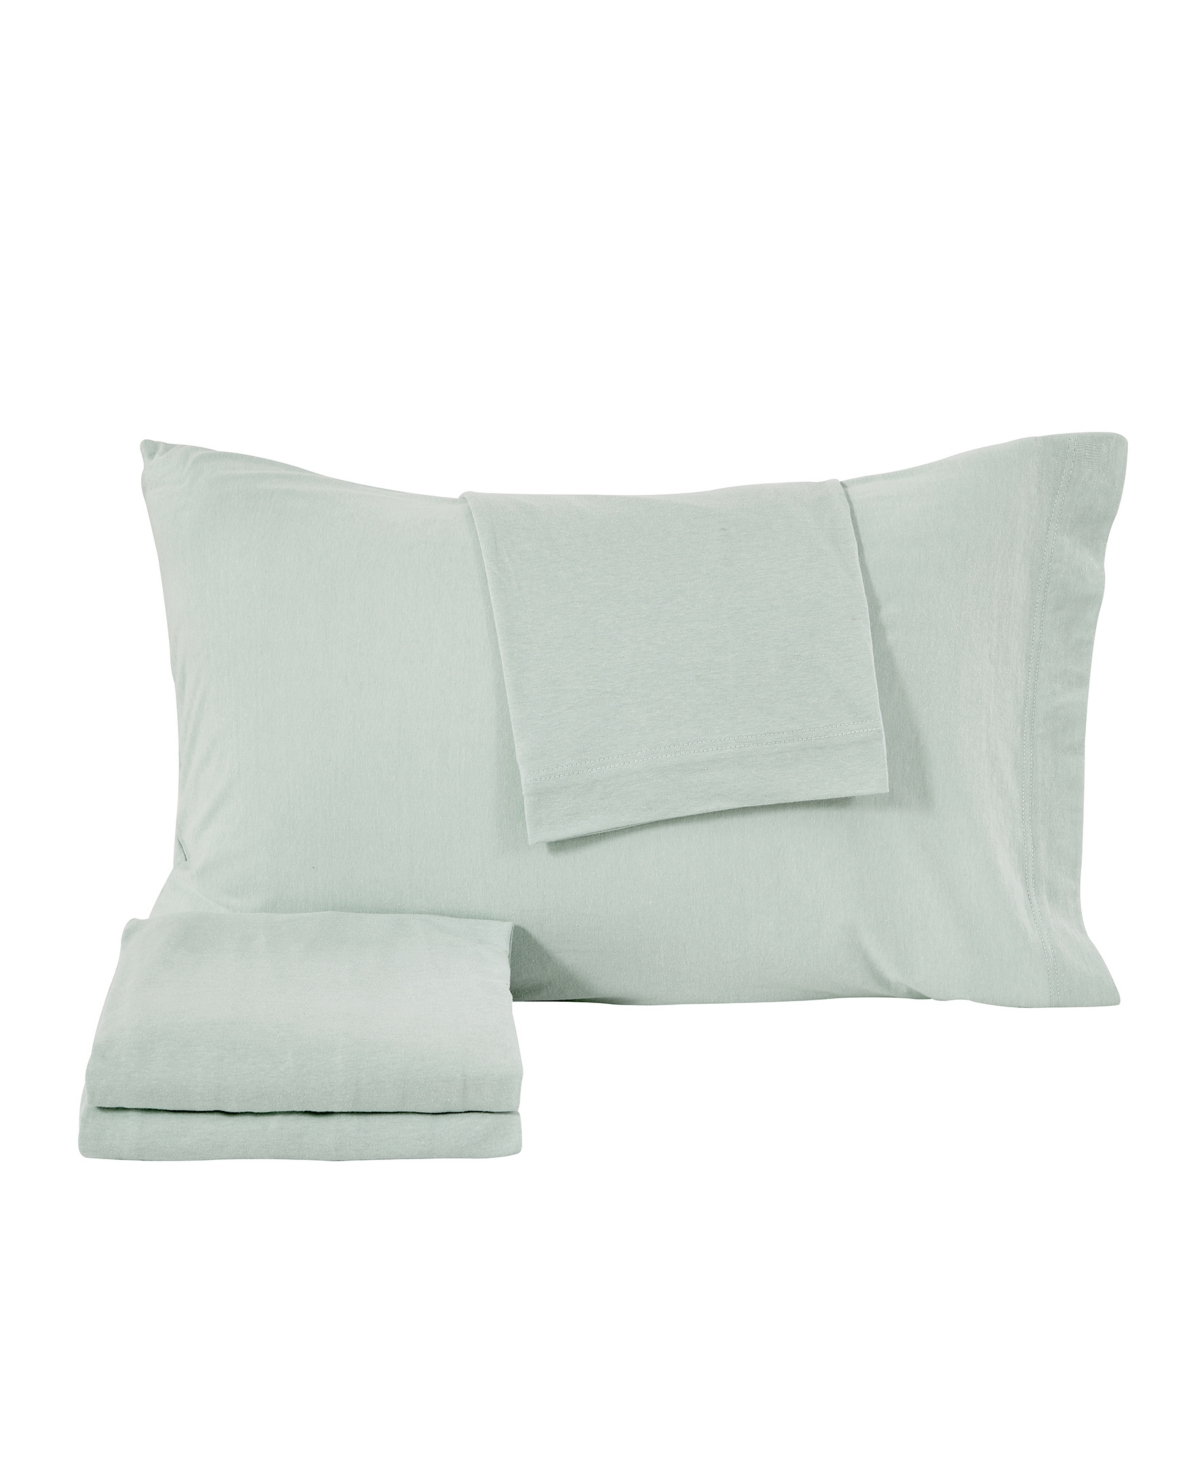 Premium Comforts Heathered Melange T-shirt Jersey Knit Cotton Blend 3 Piece Sheet Set, Twin In Heathered Aqua